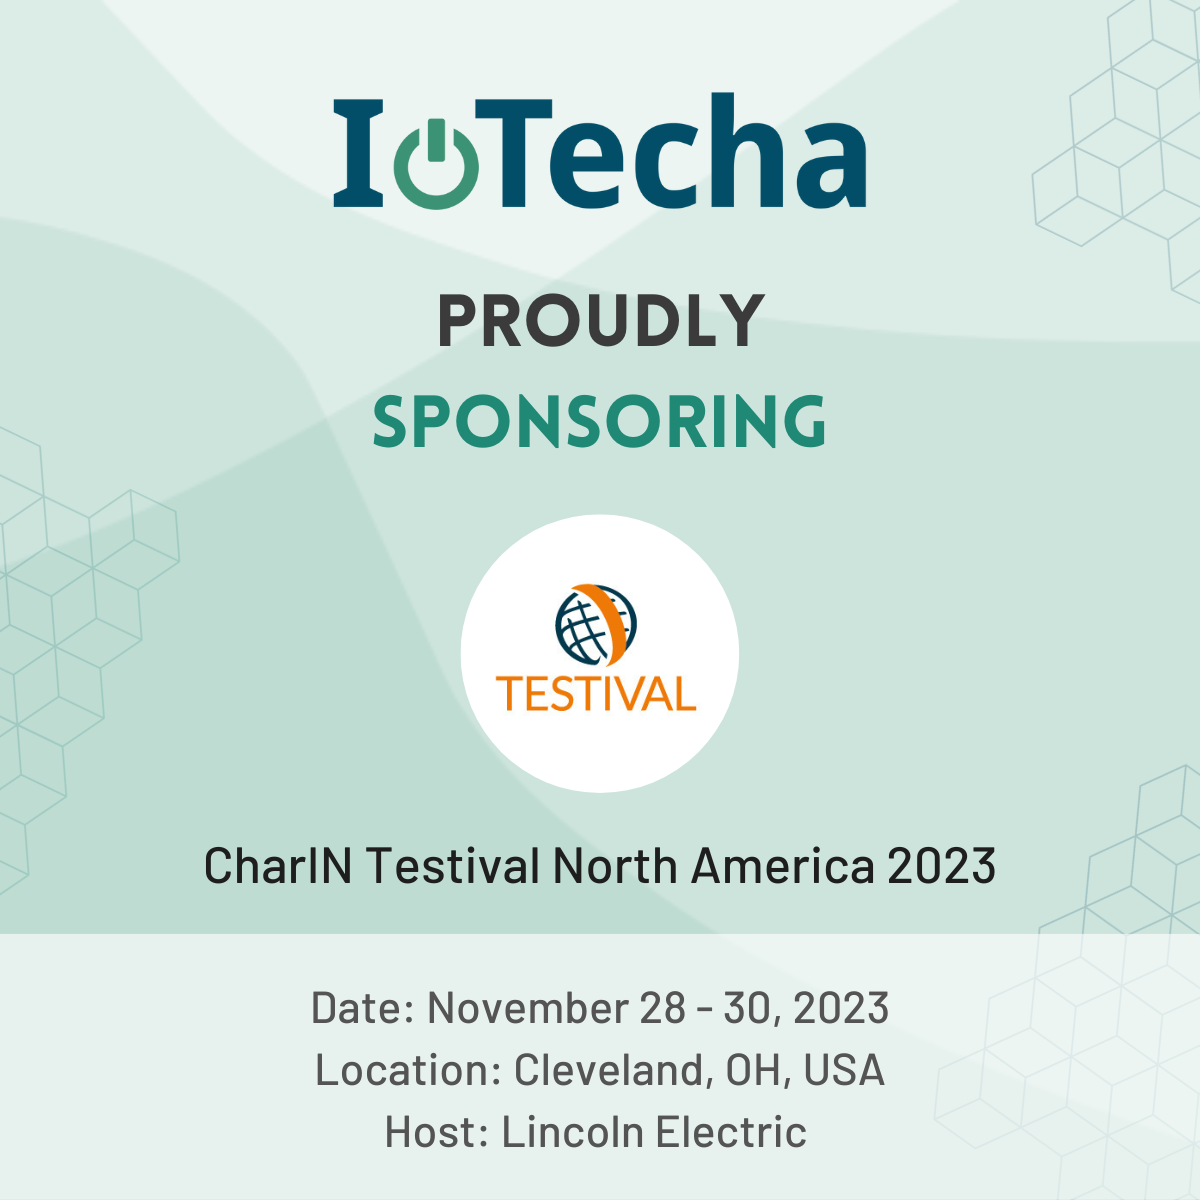 IoTecha Sponsors CharIN’s Testival North America 2023